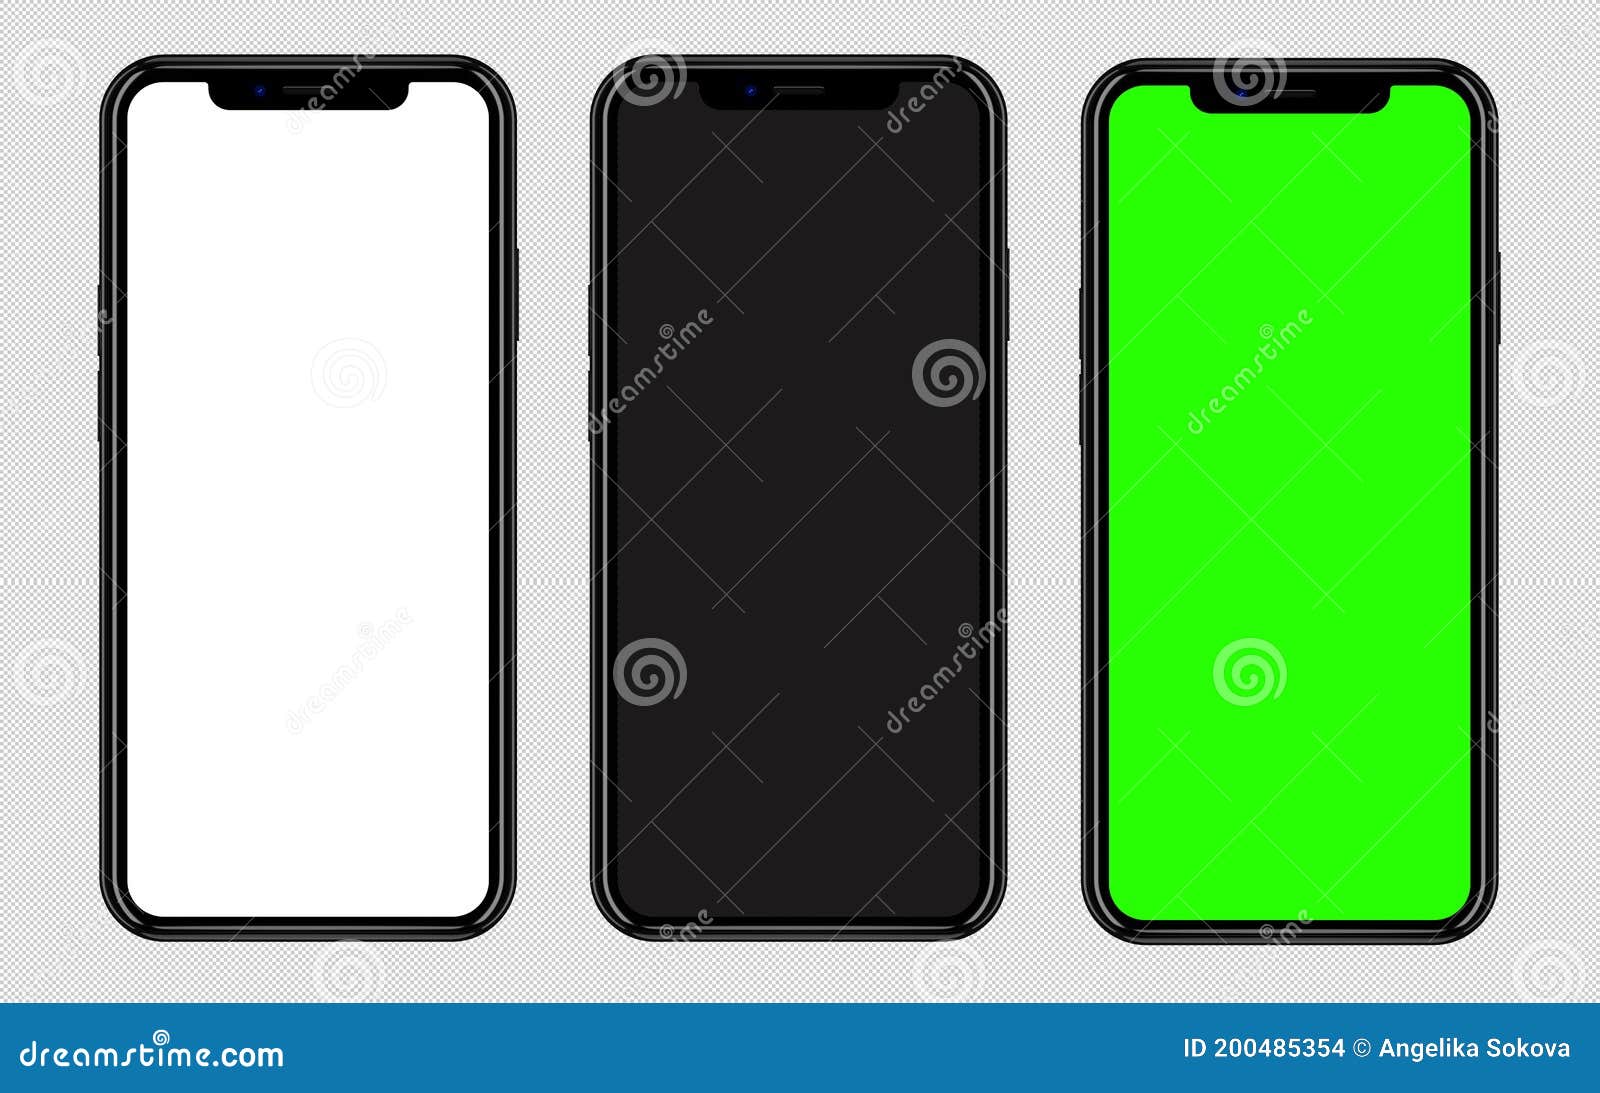 Modern Mobile Phone Black, White and Green Screen Design on ...